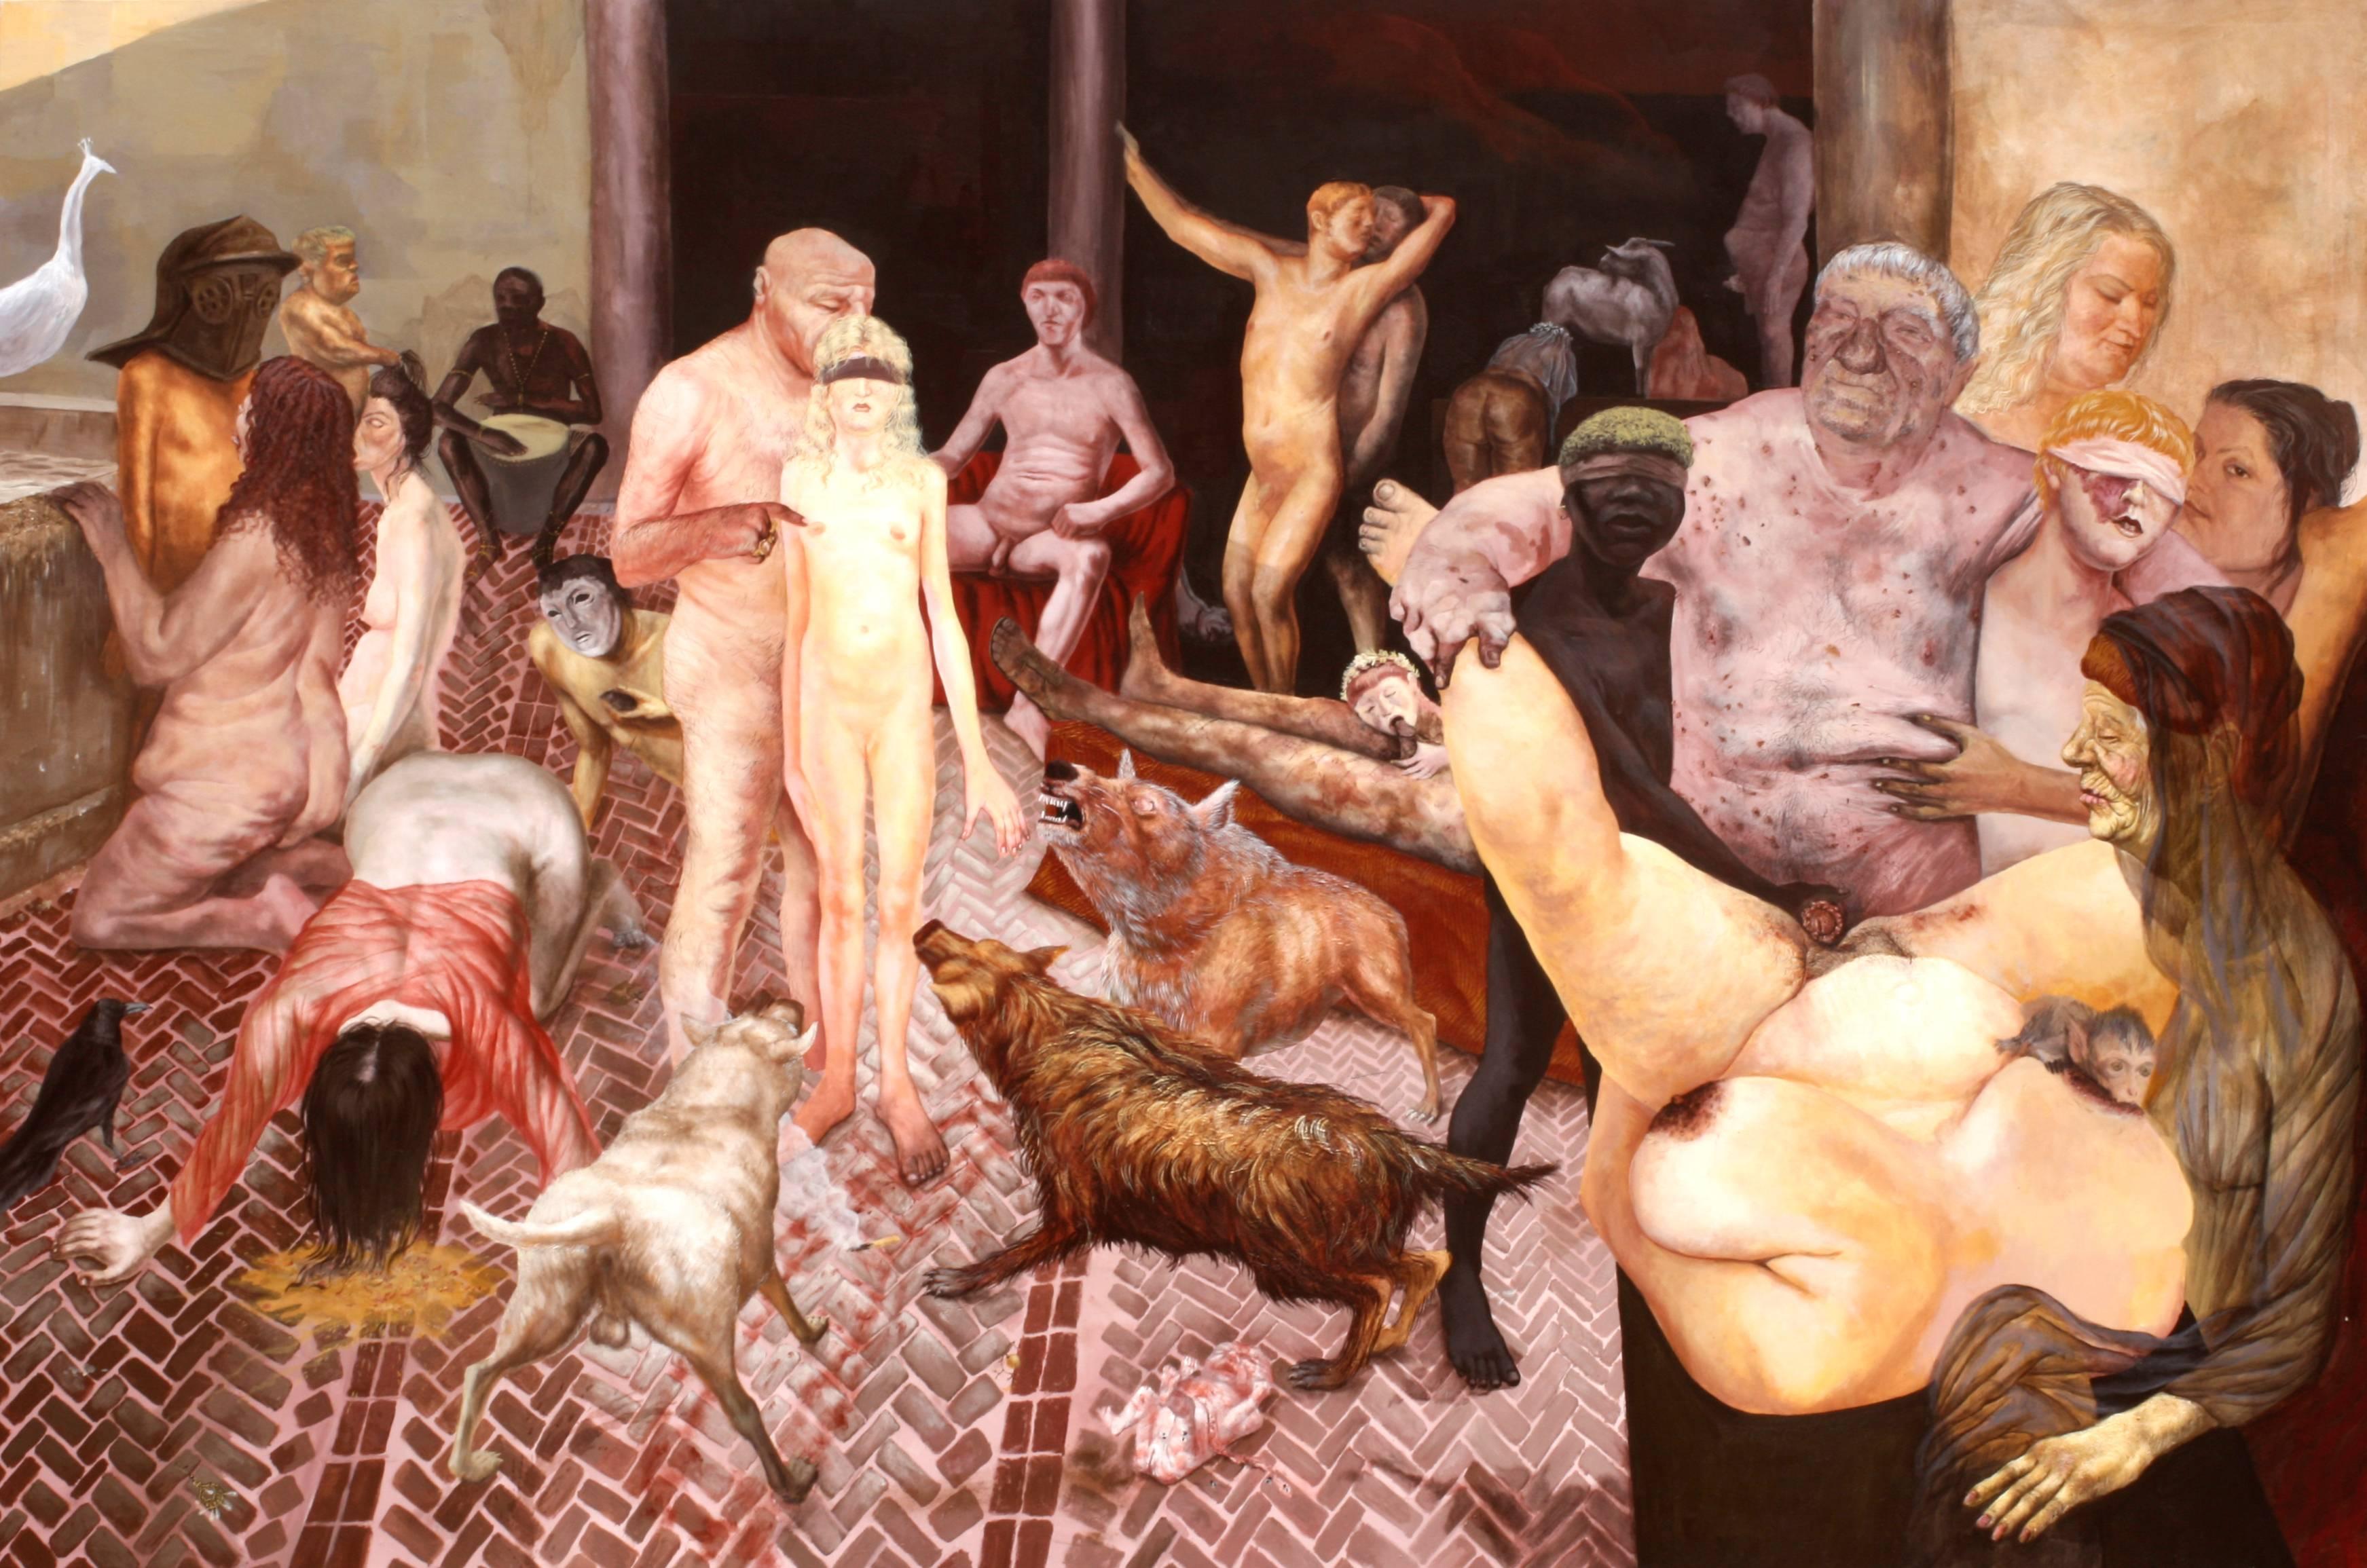 Alexandru Rădvan Nude Painting - Cancer - 21st Century, Acrylic Painting, Deviant, Expressionist, Transgressive